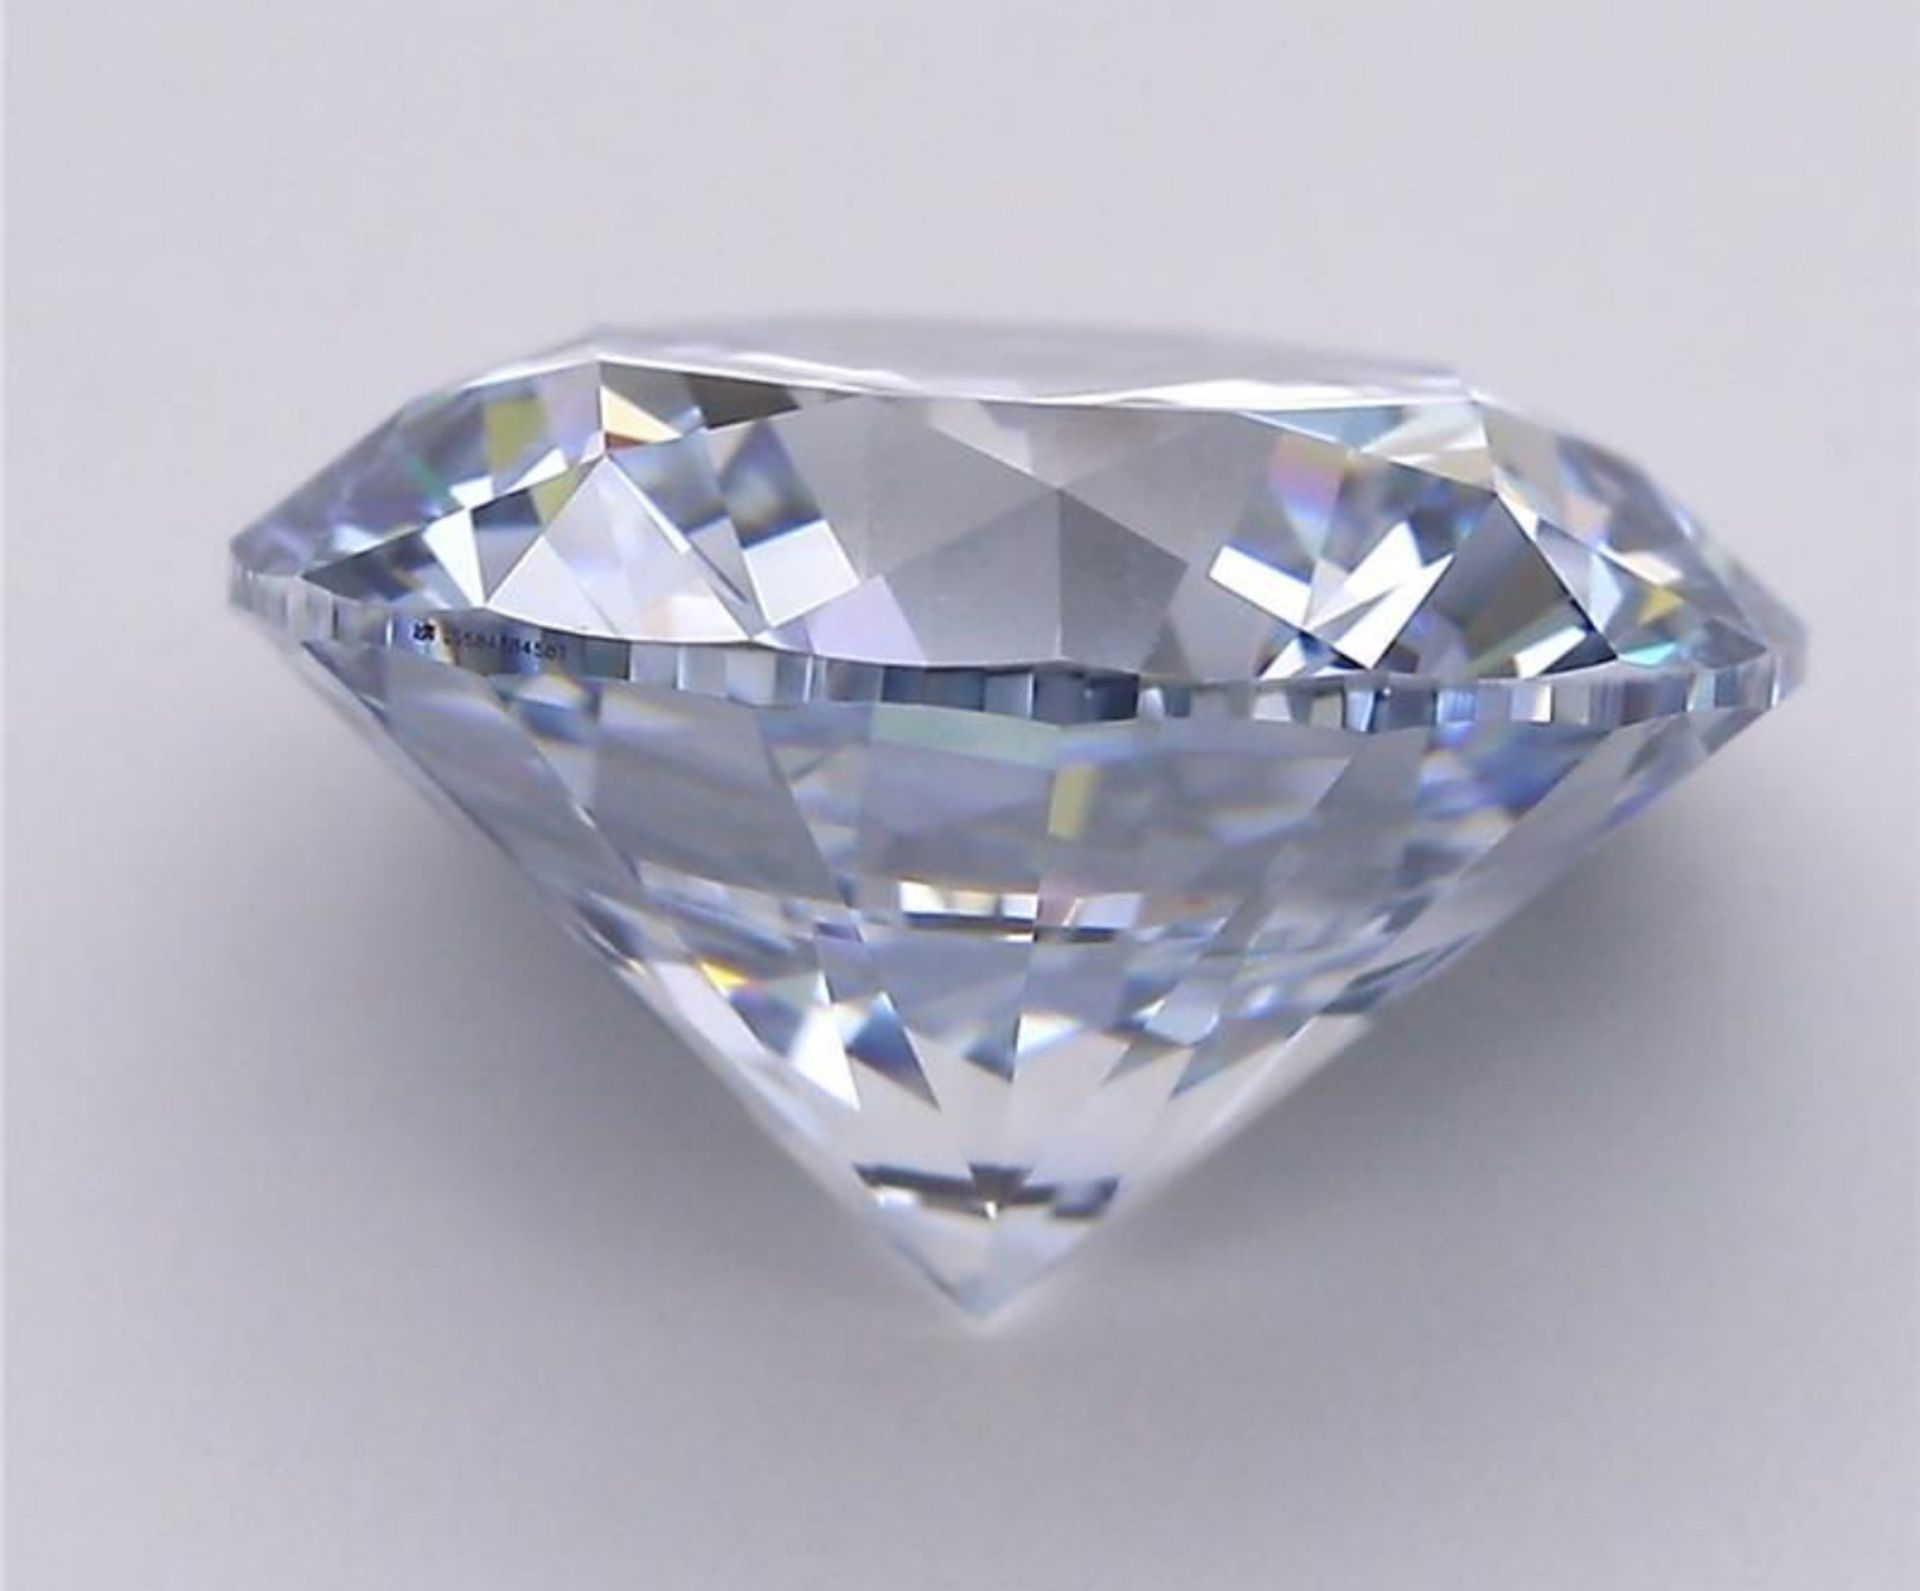 ** ON SALE ** Round Brilliant Cut Diamond 5.09 Carat Fancy Blue Colour SI1 Clarity - IGI Certificate - Image 4 of 7